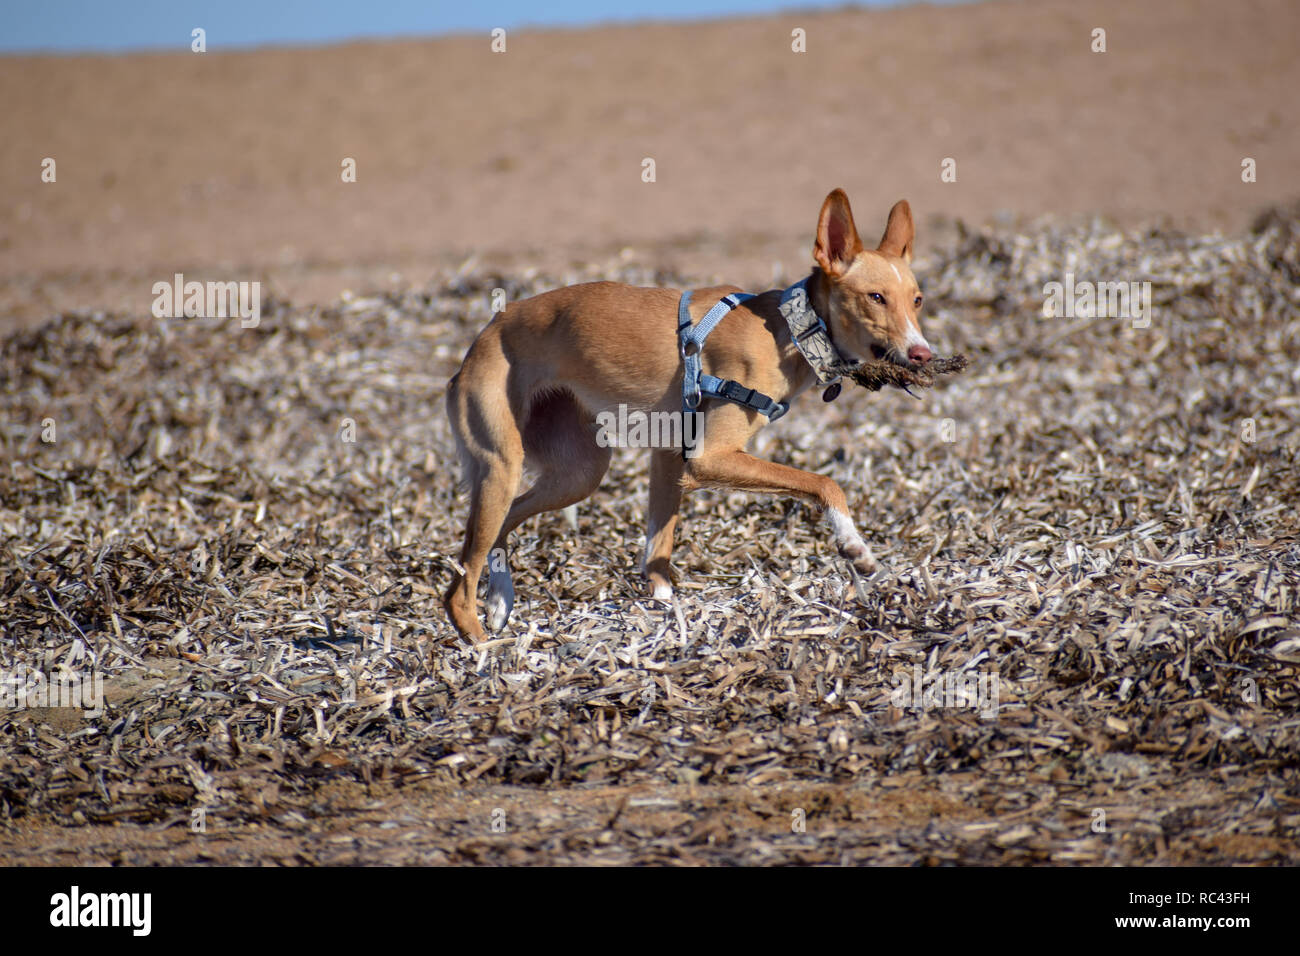 Labrador and bulldog fotografías e imágenes de alta resolución - Página 5 -  Alamy